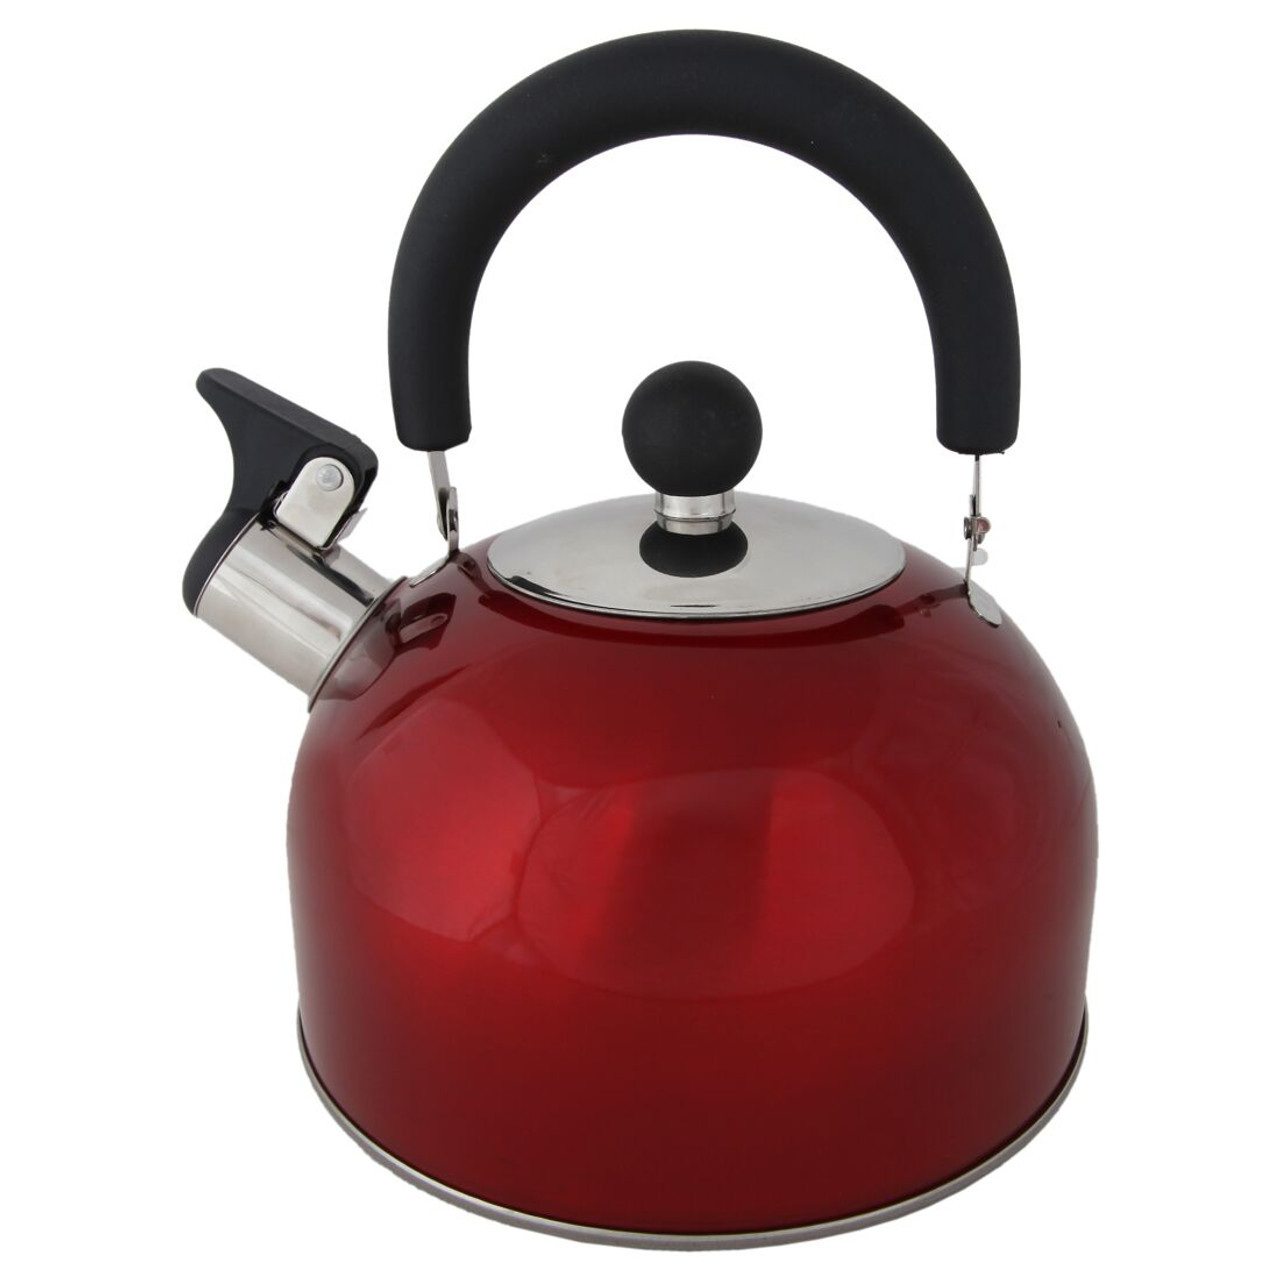 Oxo Uplift 2-quart tea kettle  Tea kettle, Kettle, Red and white kitchen